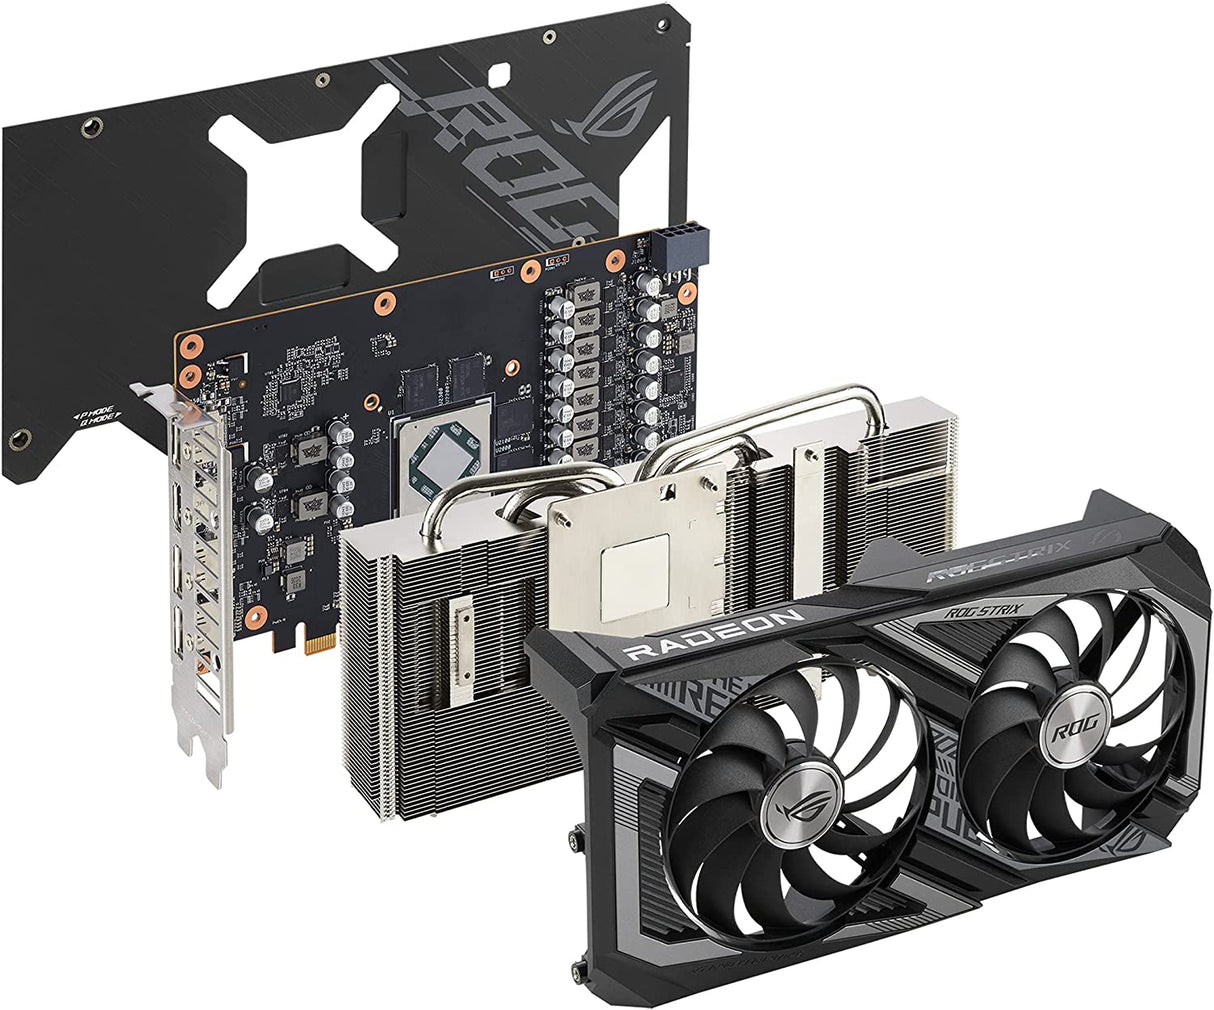 ASUS ROG Strix AMD Radeon RX 6600 XT OC Edition Gaming Graphics Card (AMD RDNA 2, PCIe 4.0, 8GB GDDR6, HDMI 2.1, DisplayPort 1.4a, Axial-tech Fan Design, Super Alloy Power II, GPU Tweak II)